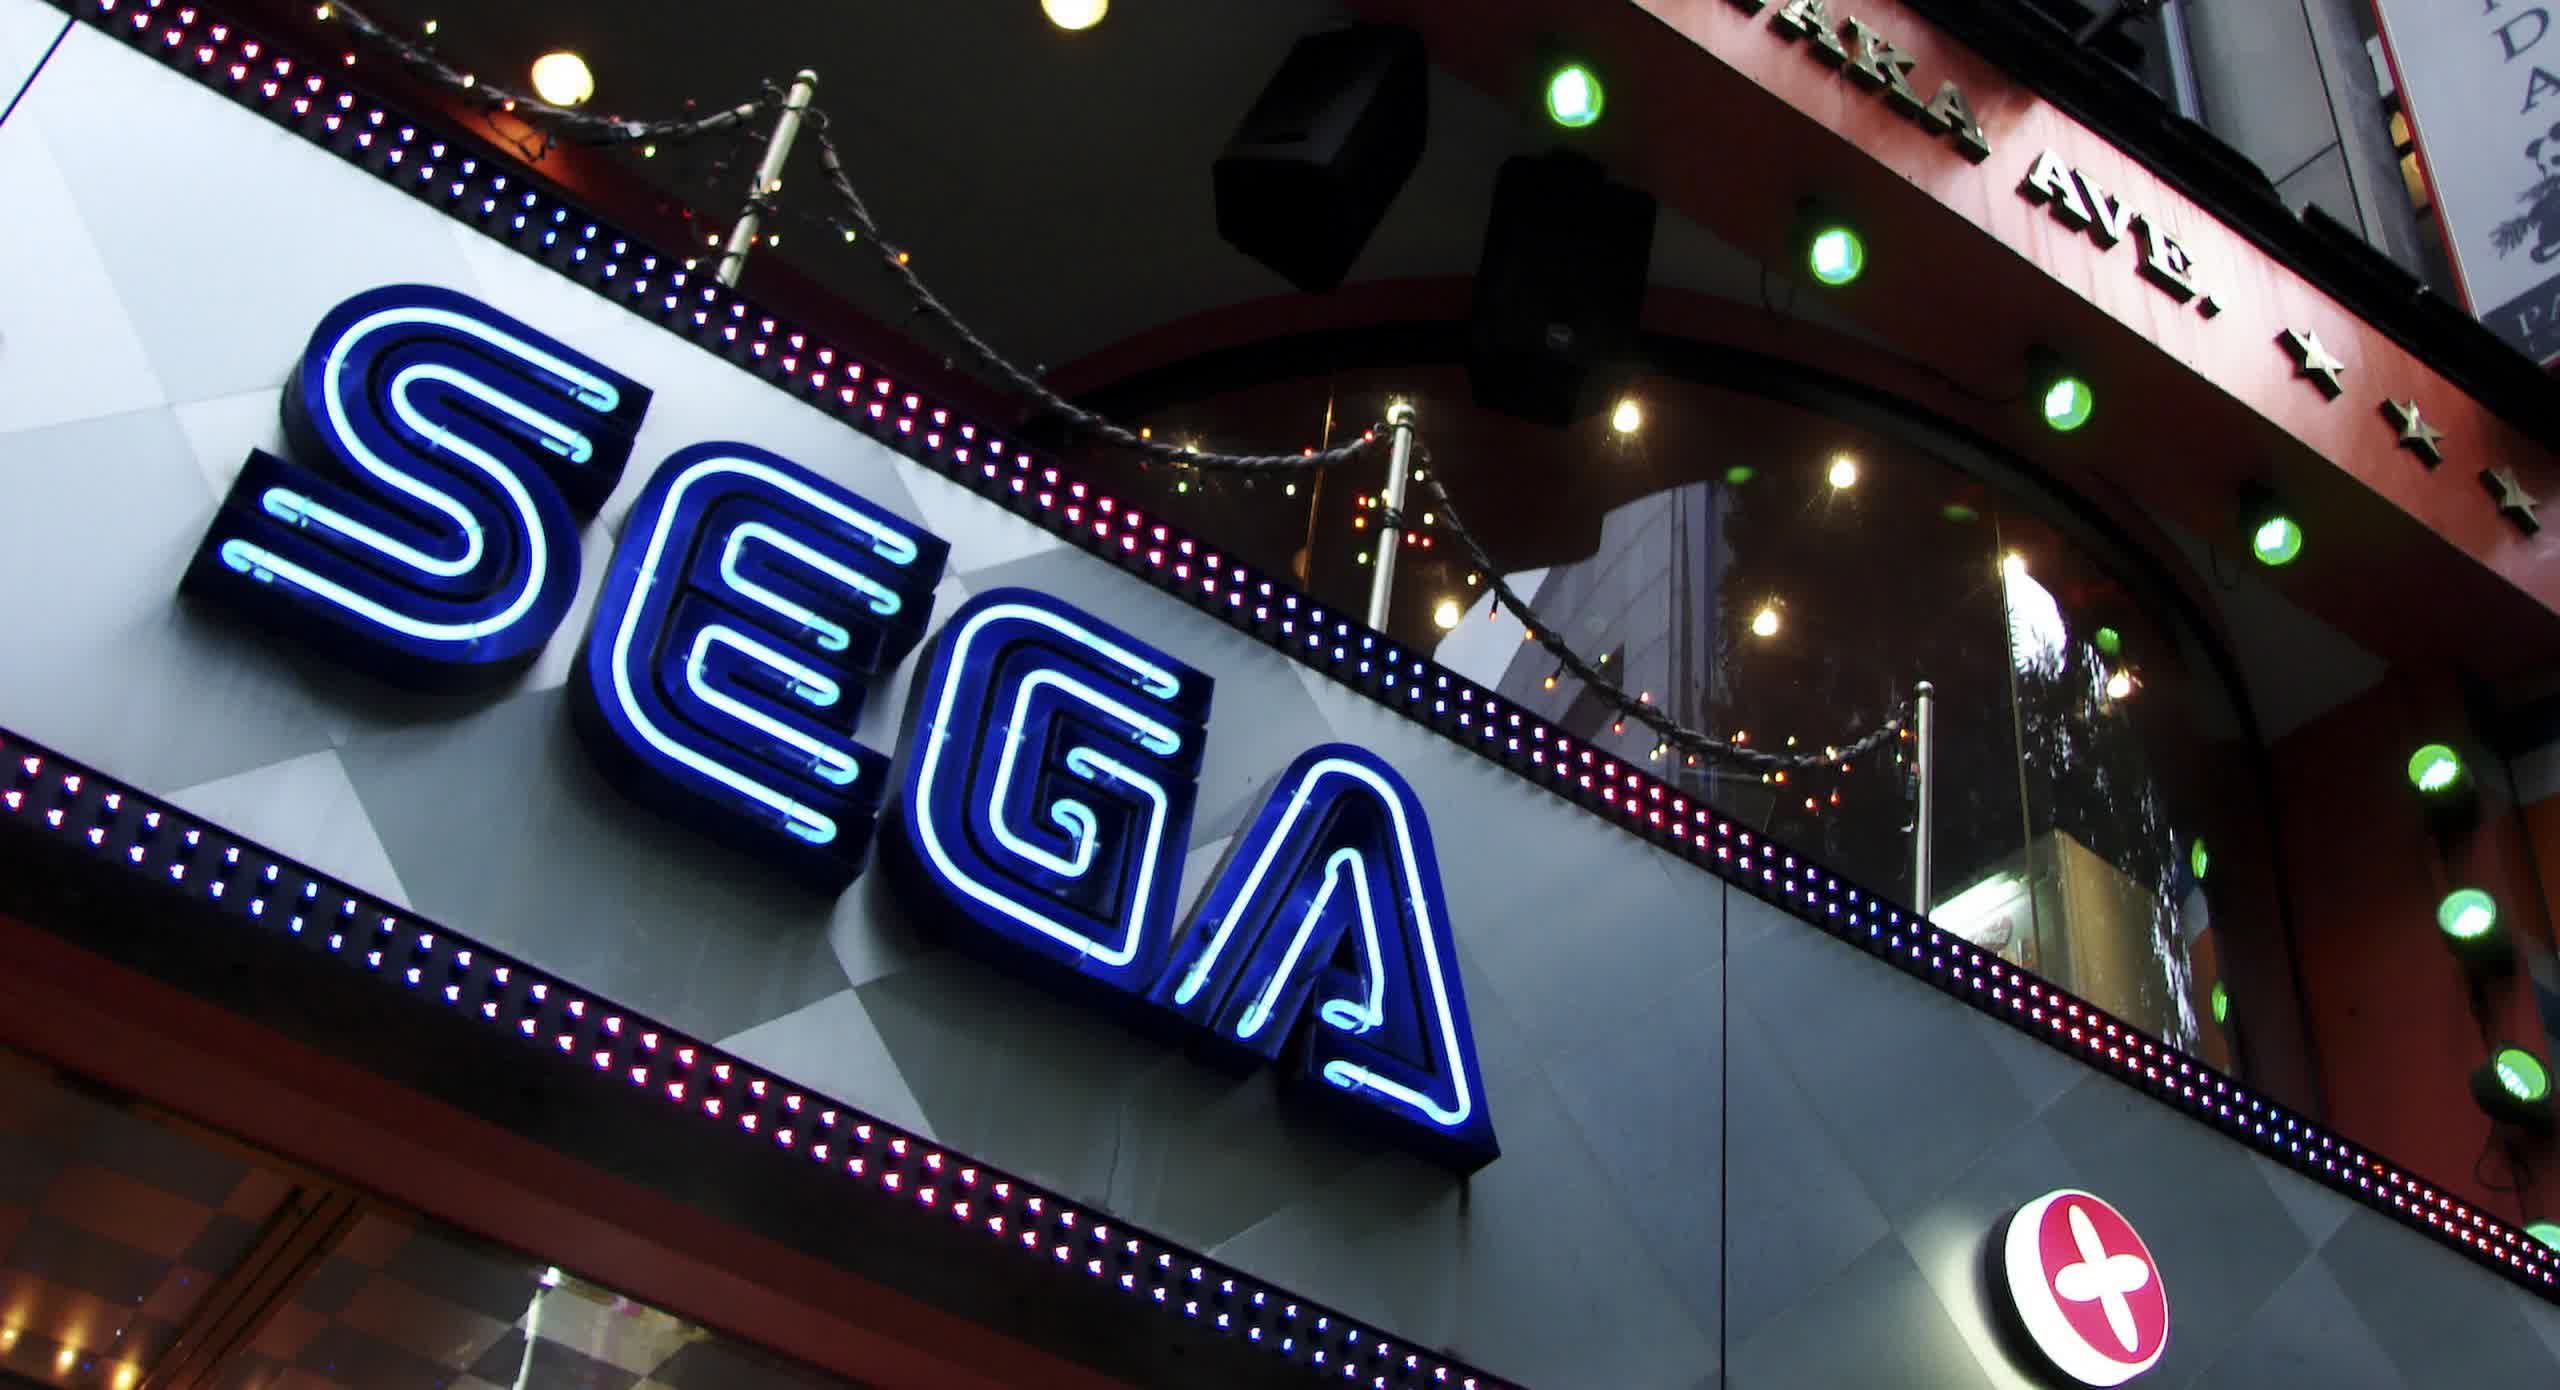 Sega says its 'Super Game' won't be Microsoft-exclusive